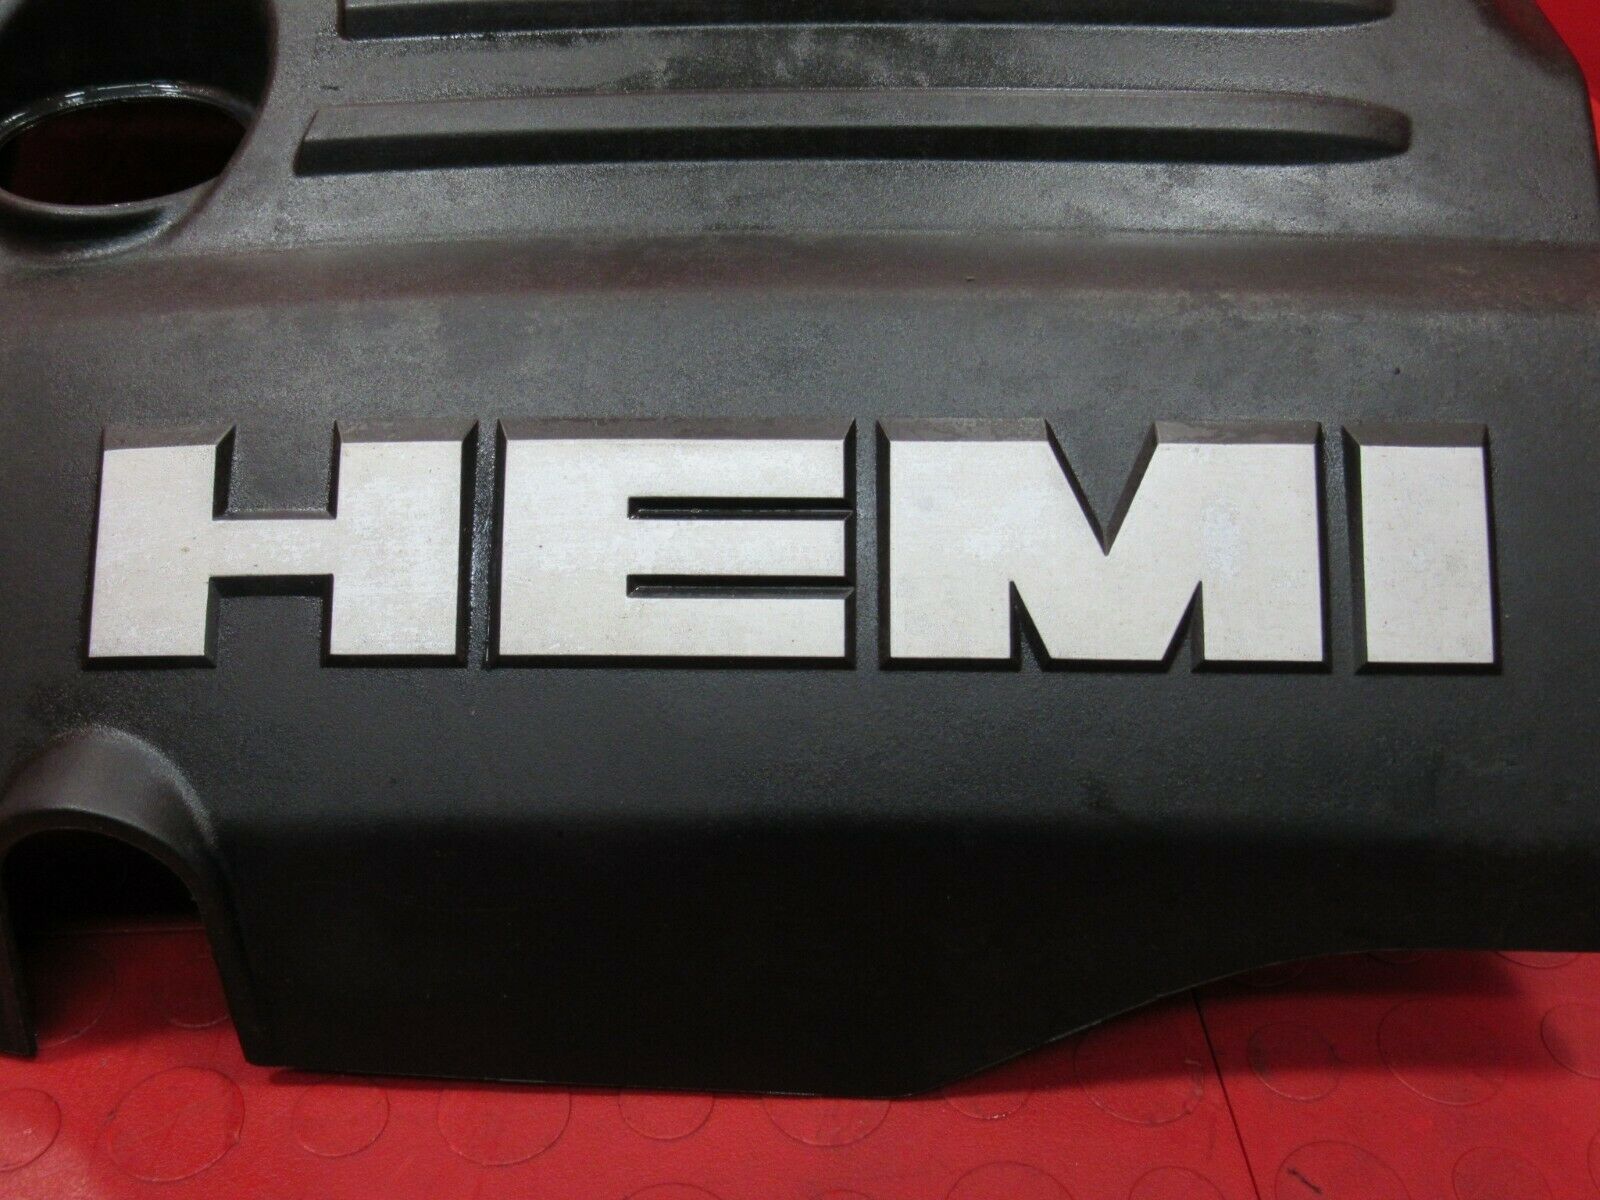 05-08 Dodge Charger Magnum 5.7L Hemi Plastic Engine Cover Panel Trim OEM  4463